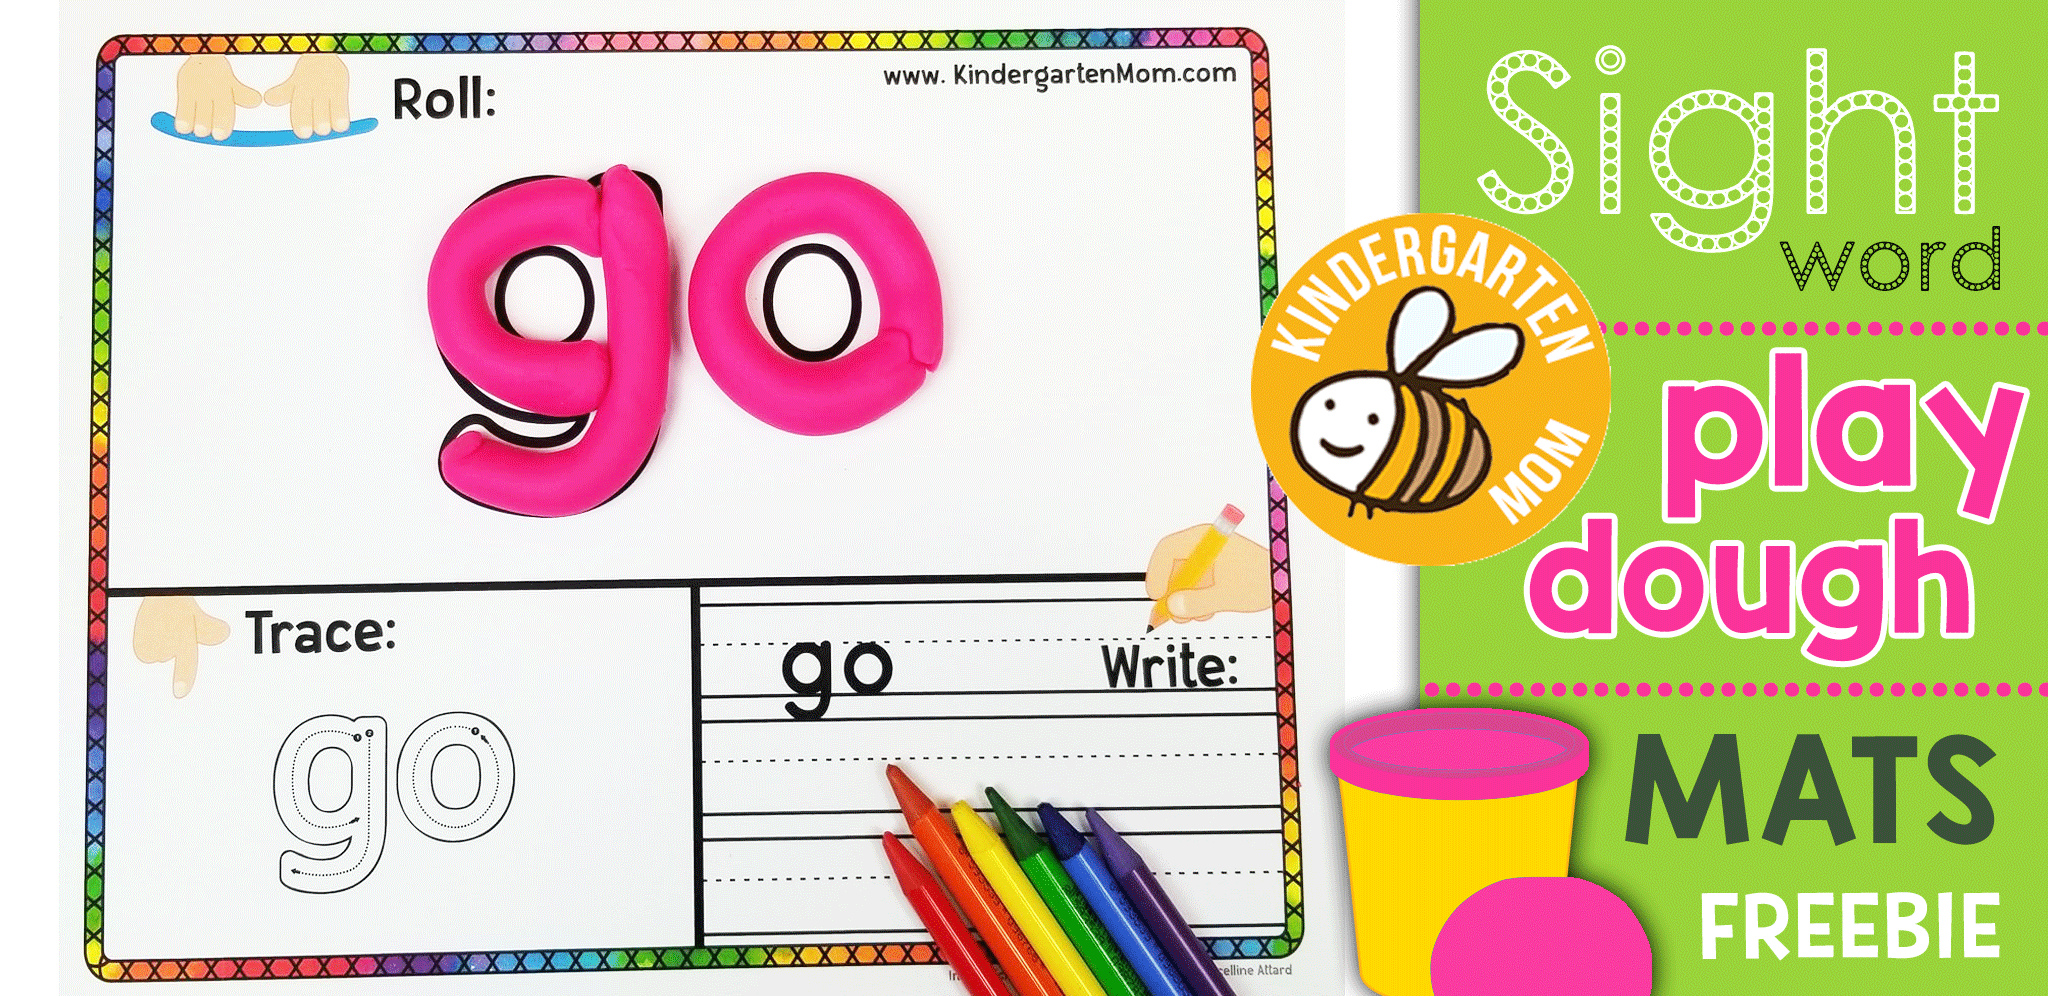 Editable Playdoh Sight Word Mats Play Dough Kindergarten Preschool Sight Word Activity